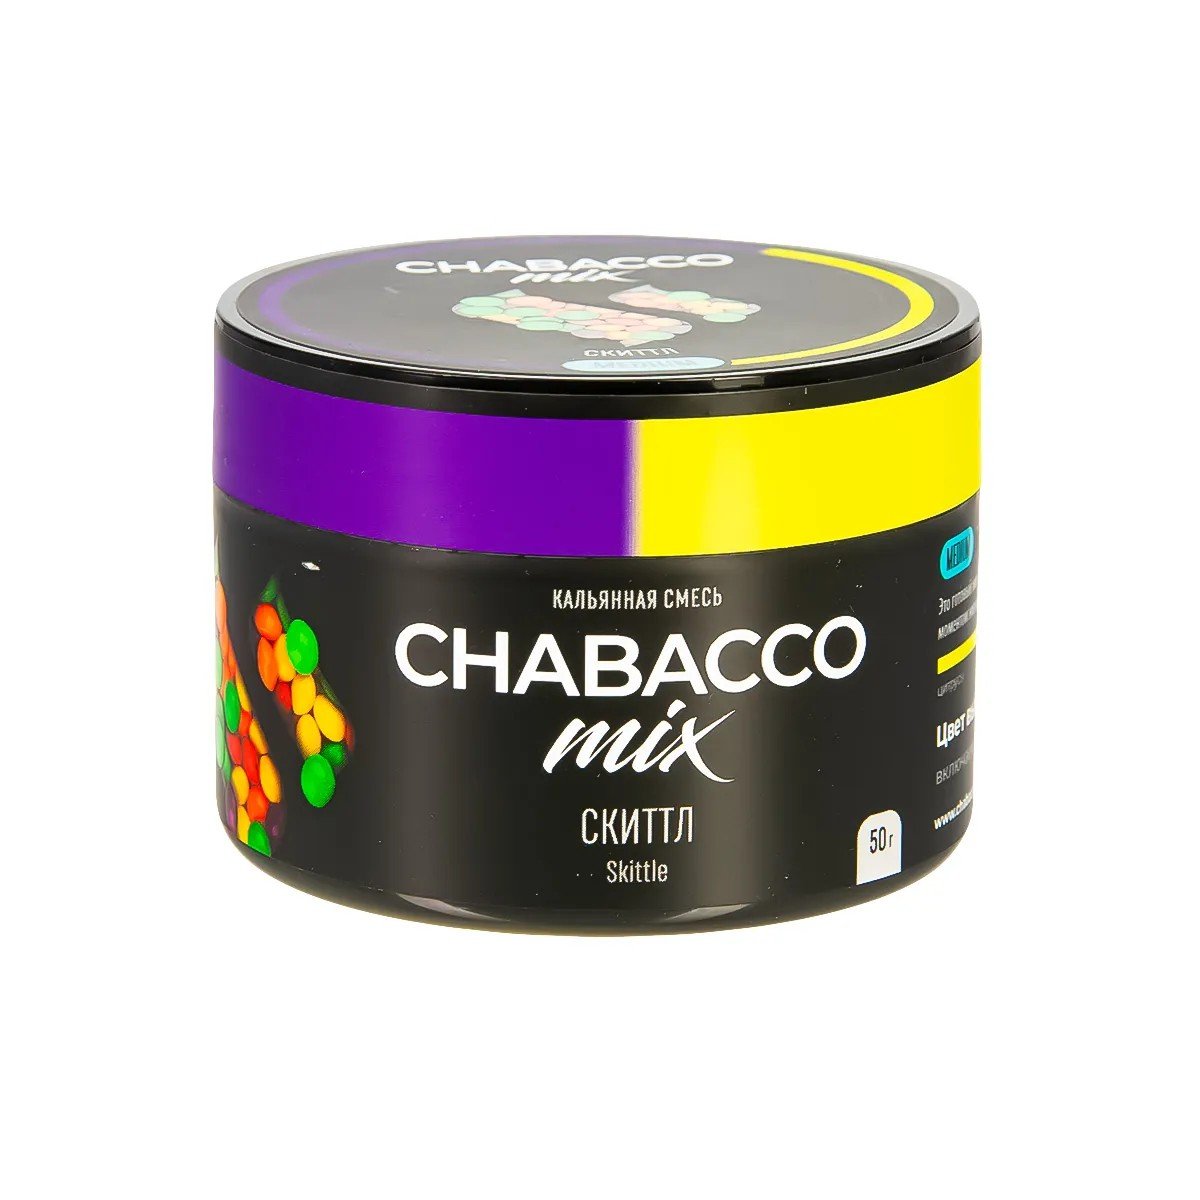 (M) Chabacco Mix 50 г Skittle (Скиттл)